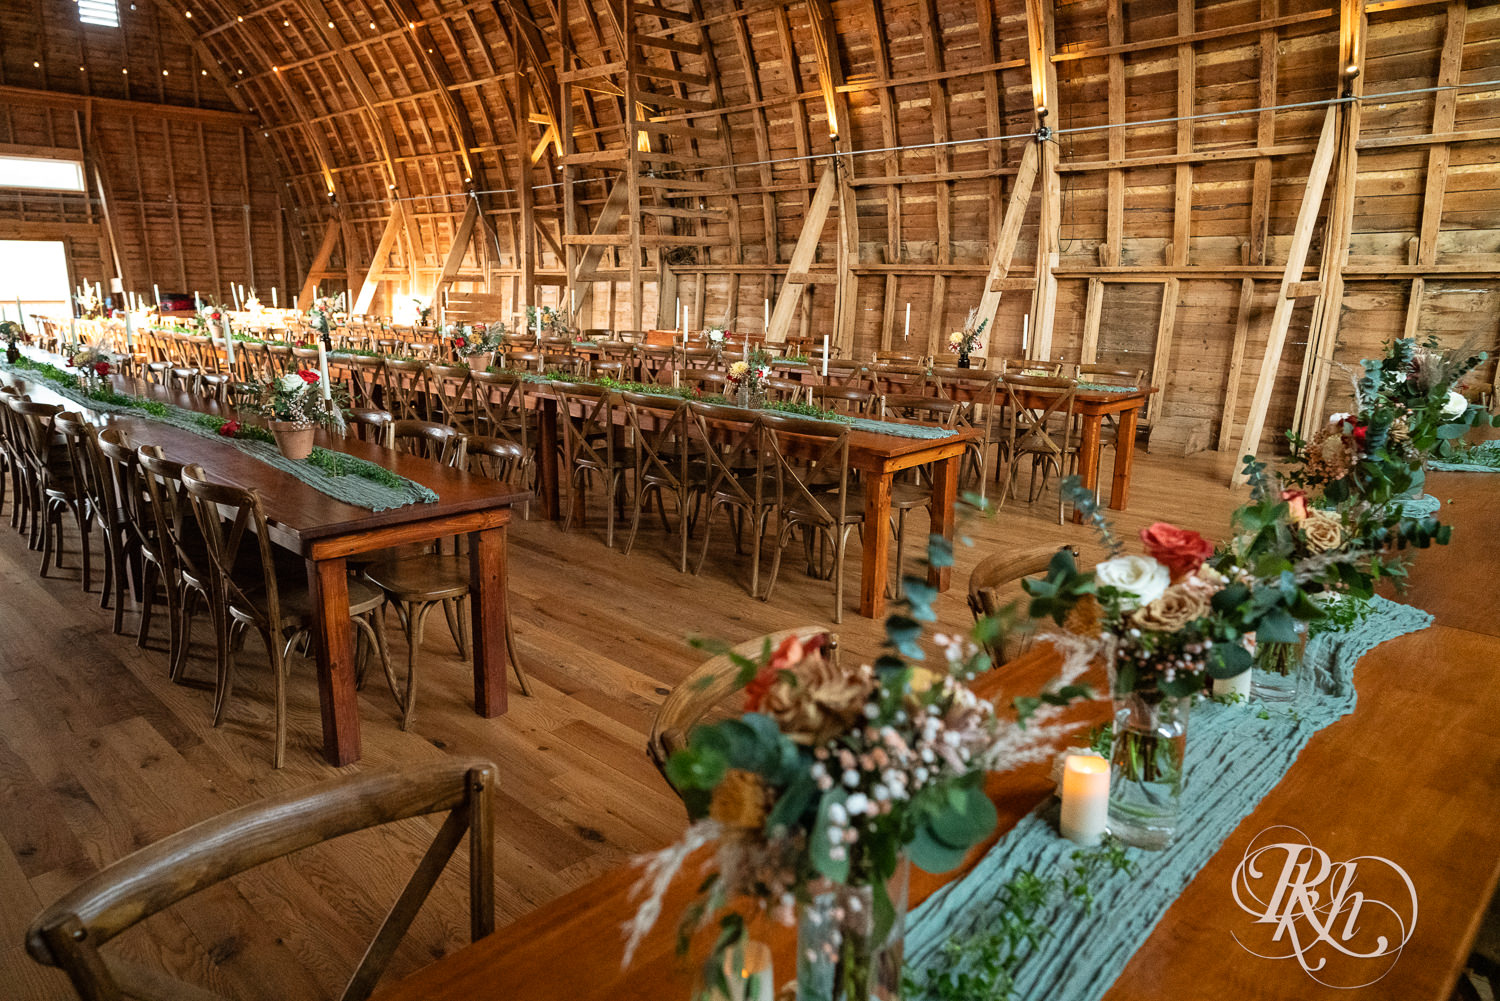 Indoor barn wedding reception setup at Hayvn at Hay River in Boyceville, Wisconsin. 